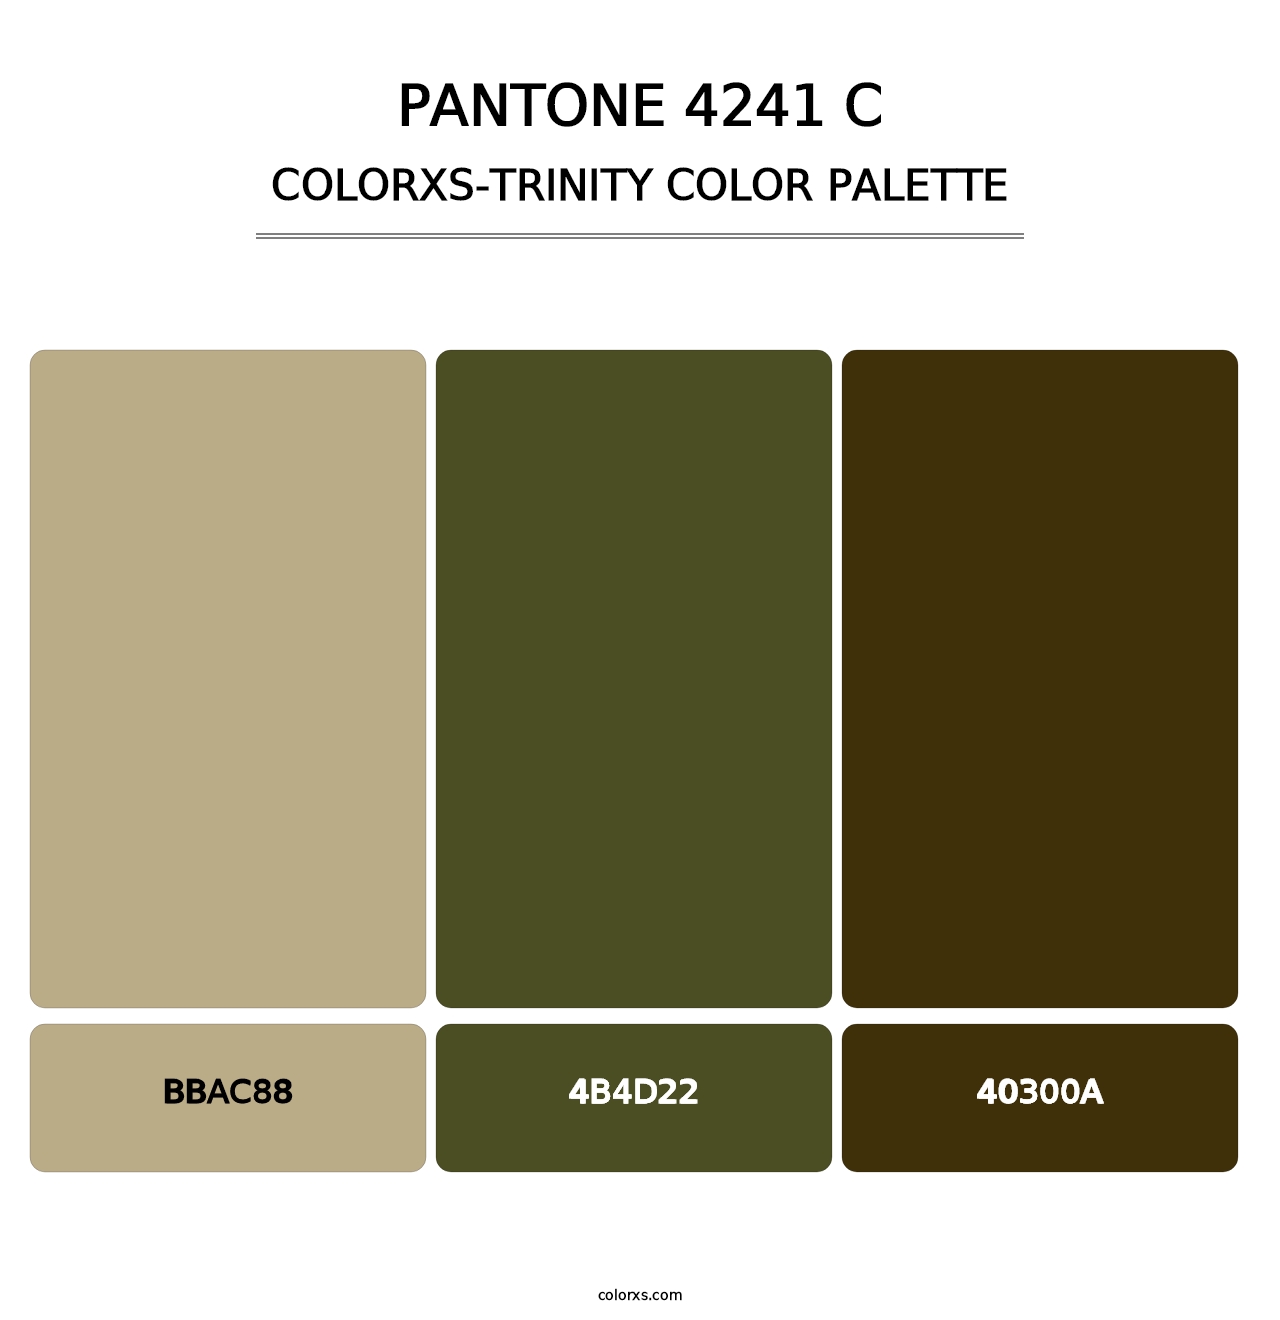 PANTONE 4241 C - Colorxs Trinity Palette